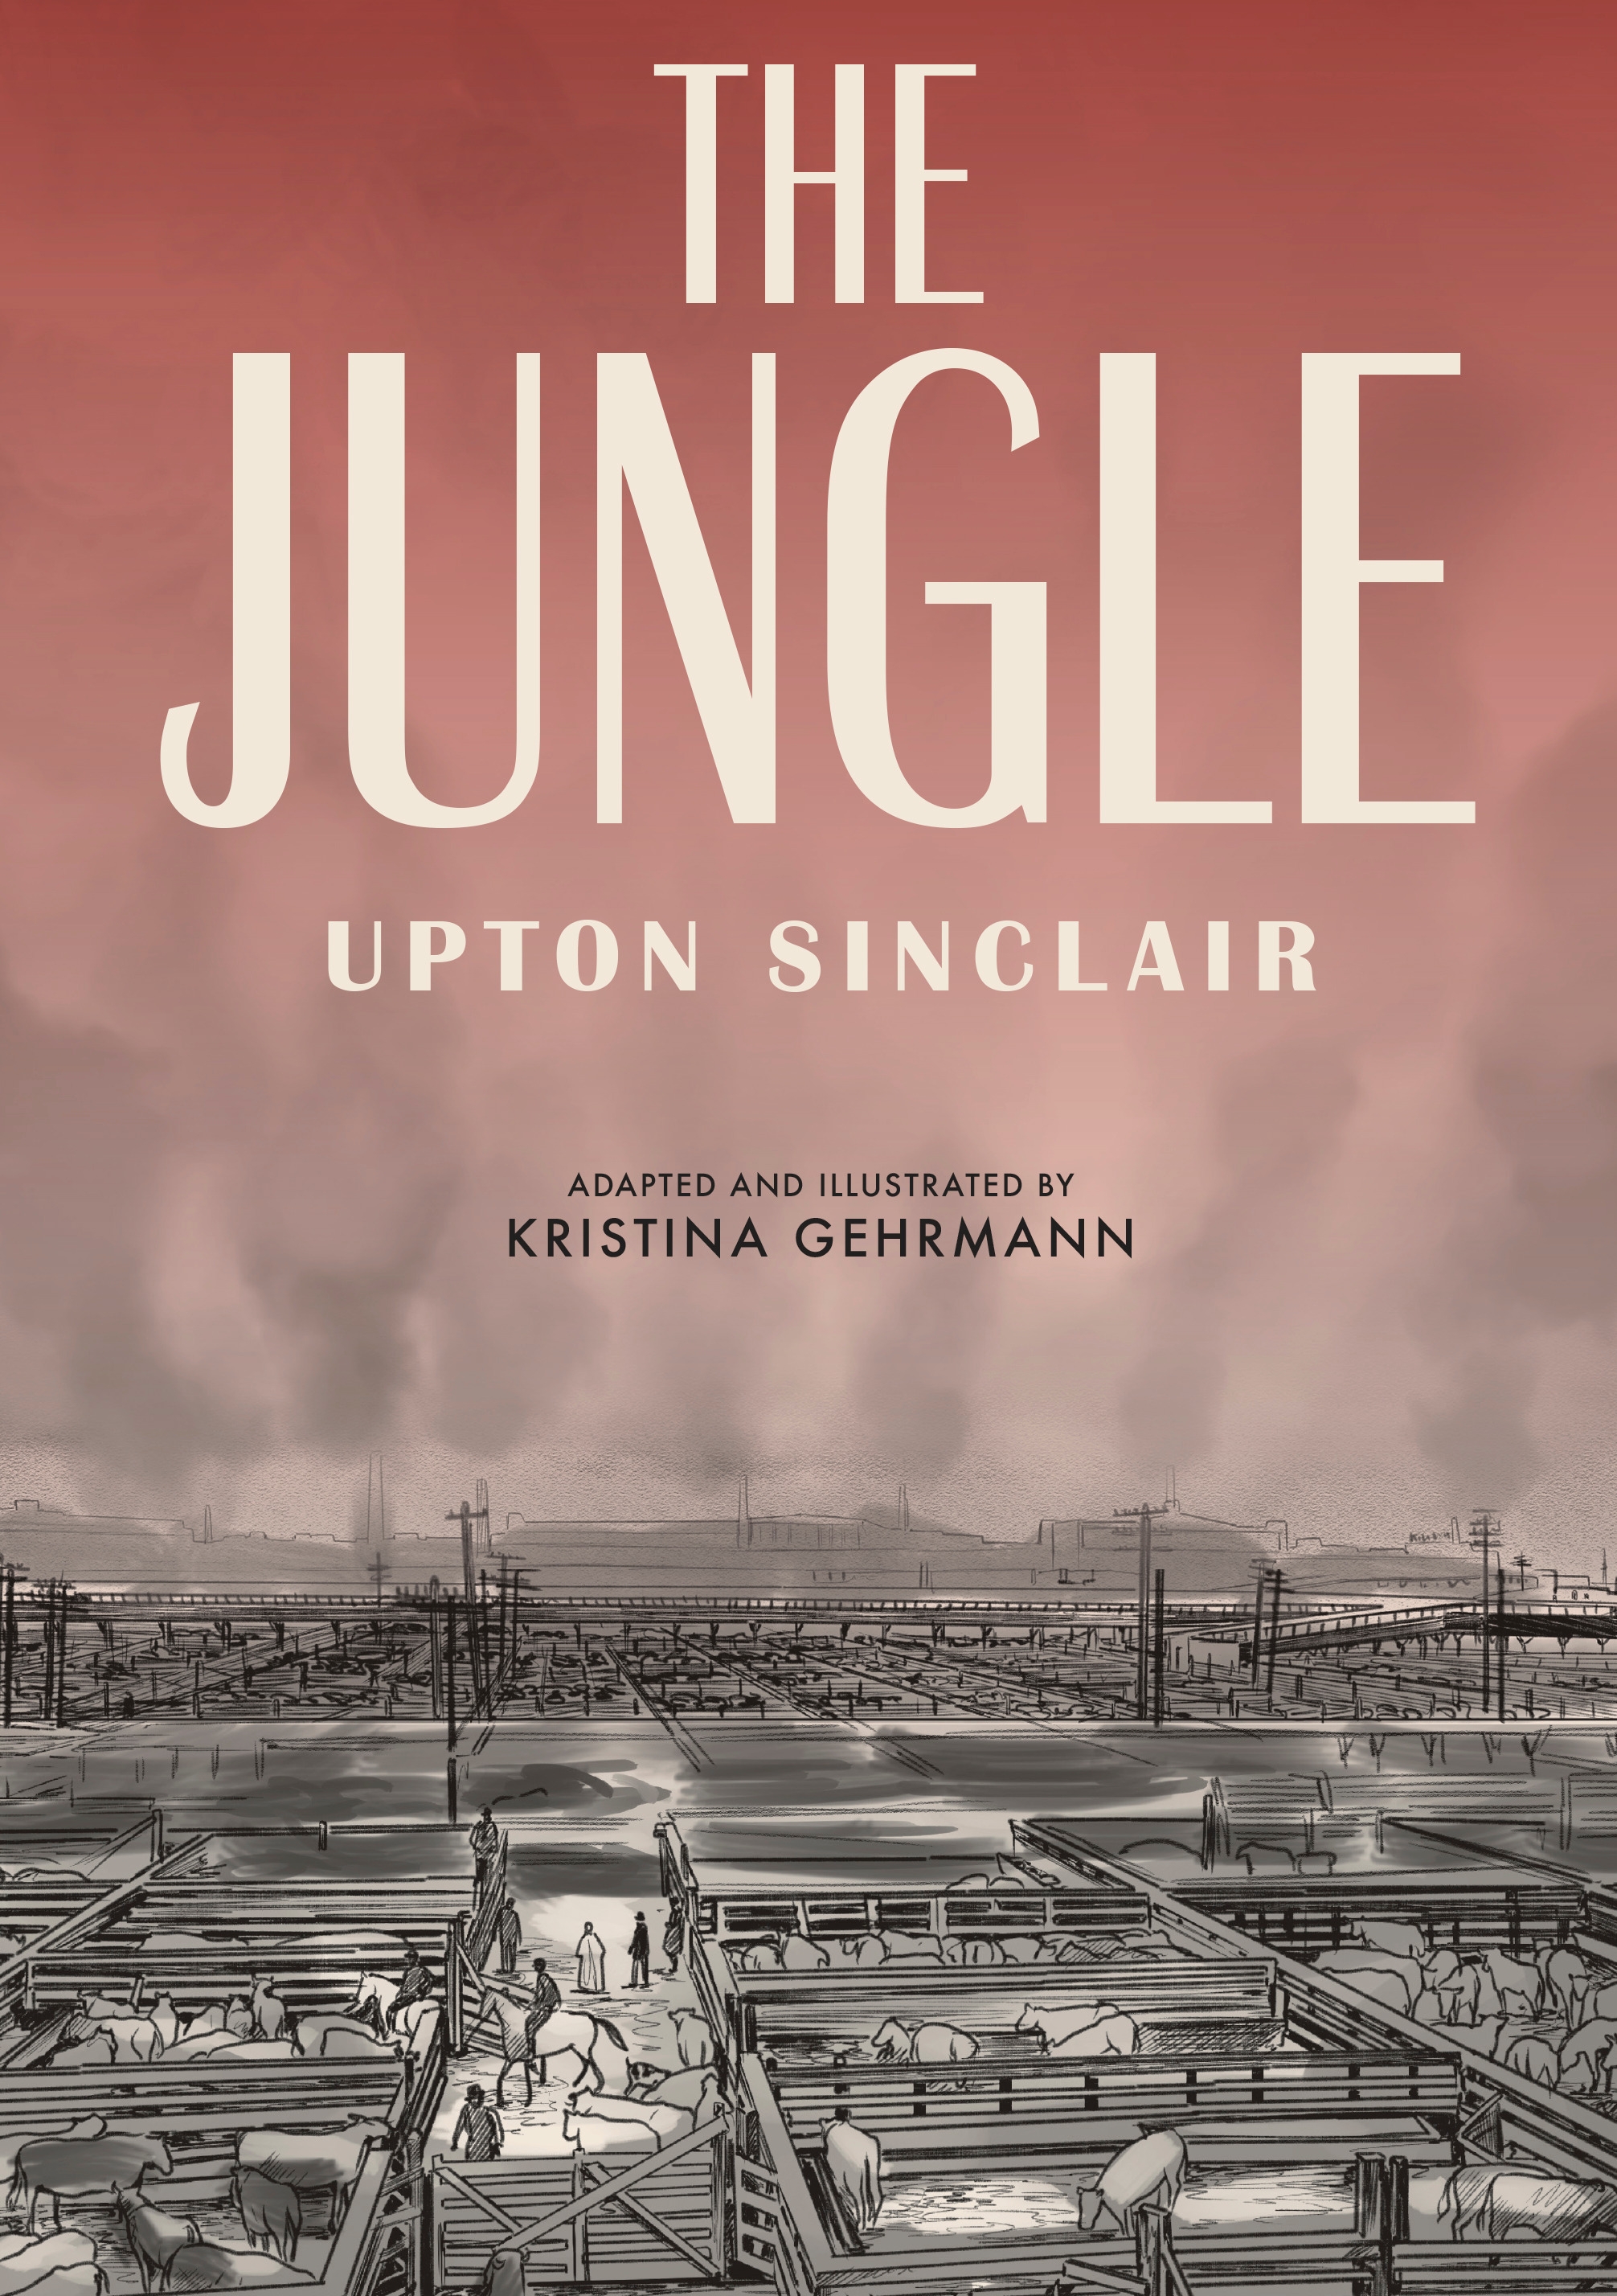 the jungle upton sinclair book review essay